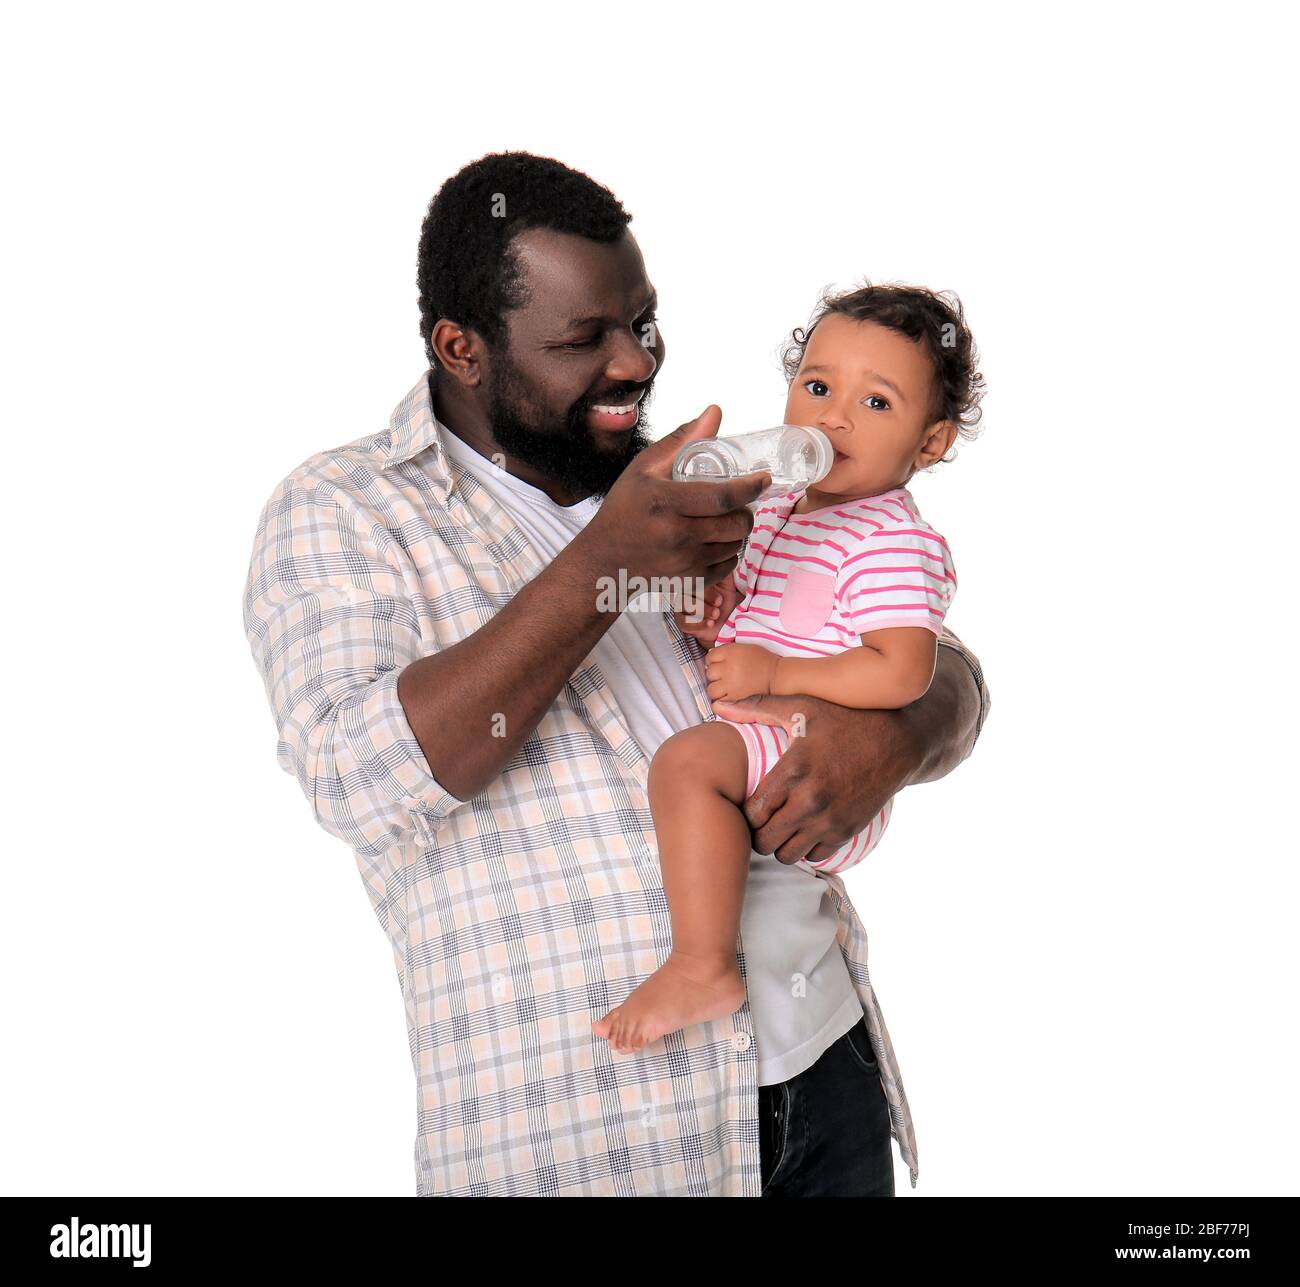 African American man feeding baby son bottle Stock Photo - Alamy